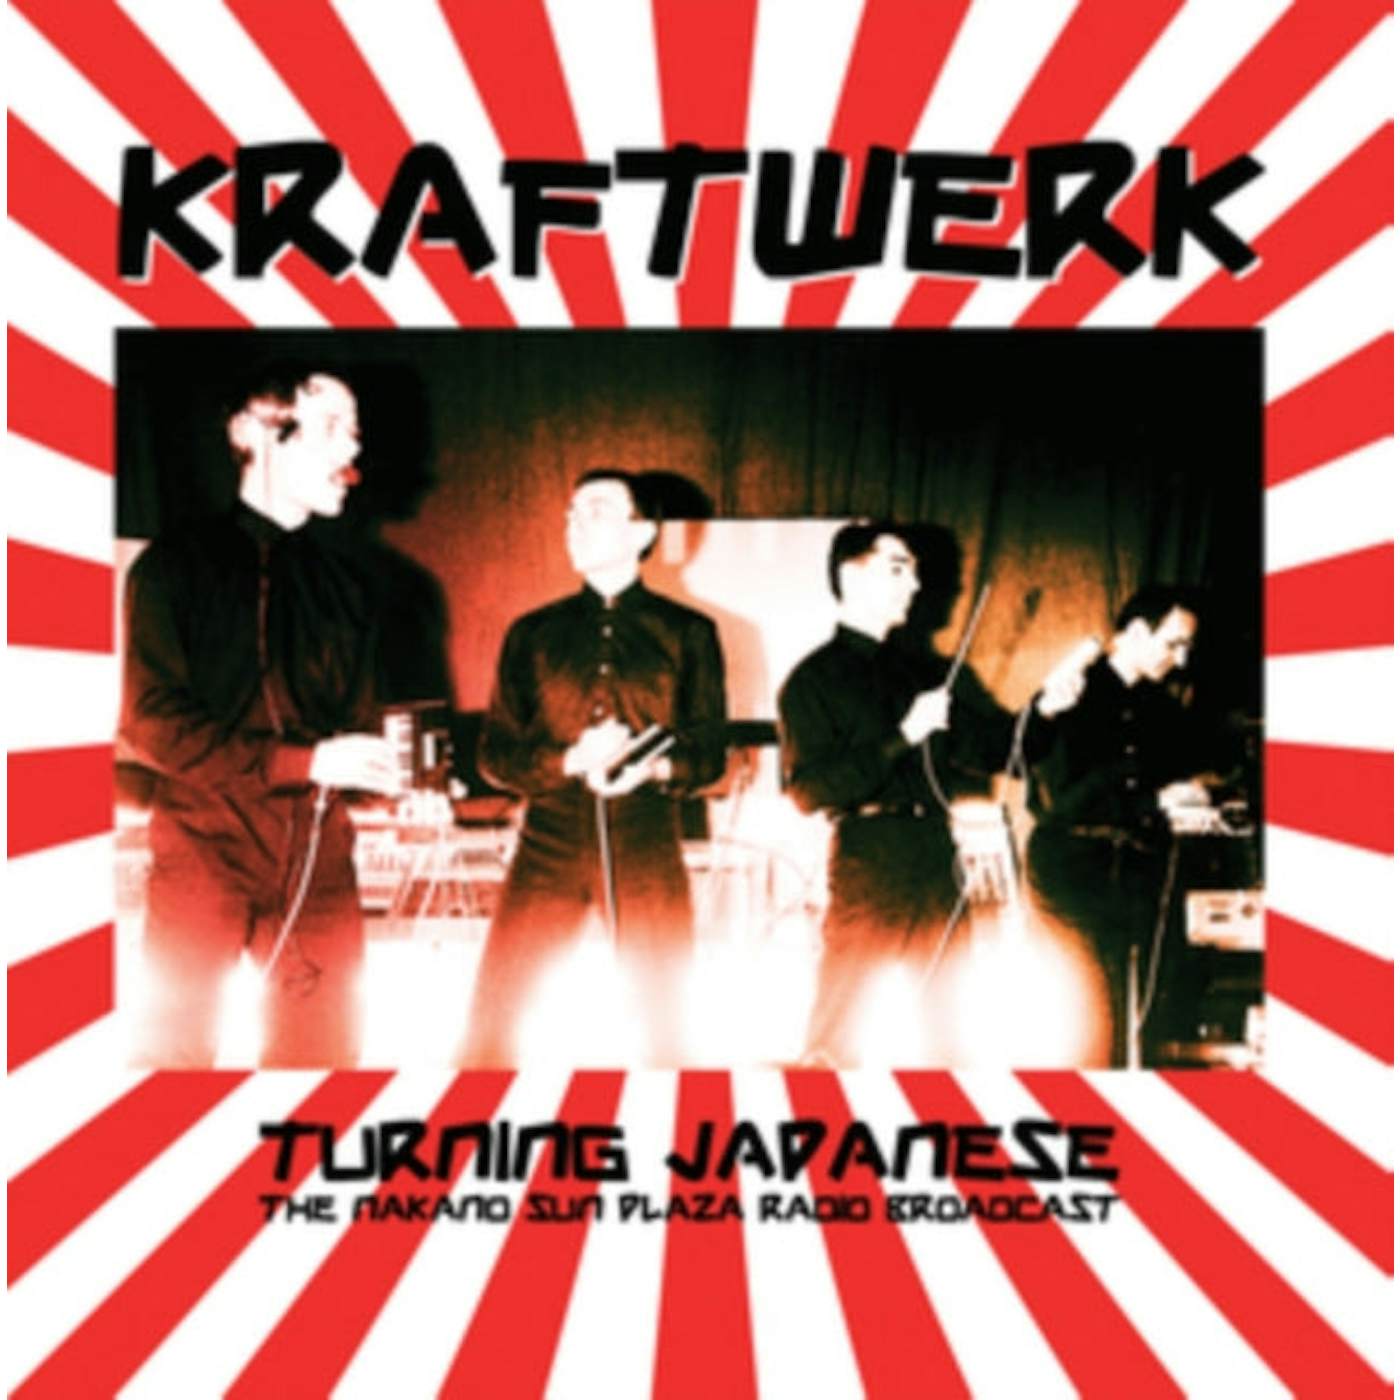 Kraftwerk LP - Turning Japanese: The Nakano Sun Plaza Radio Broadcast (Vinyl)